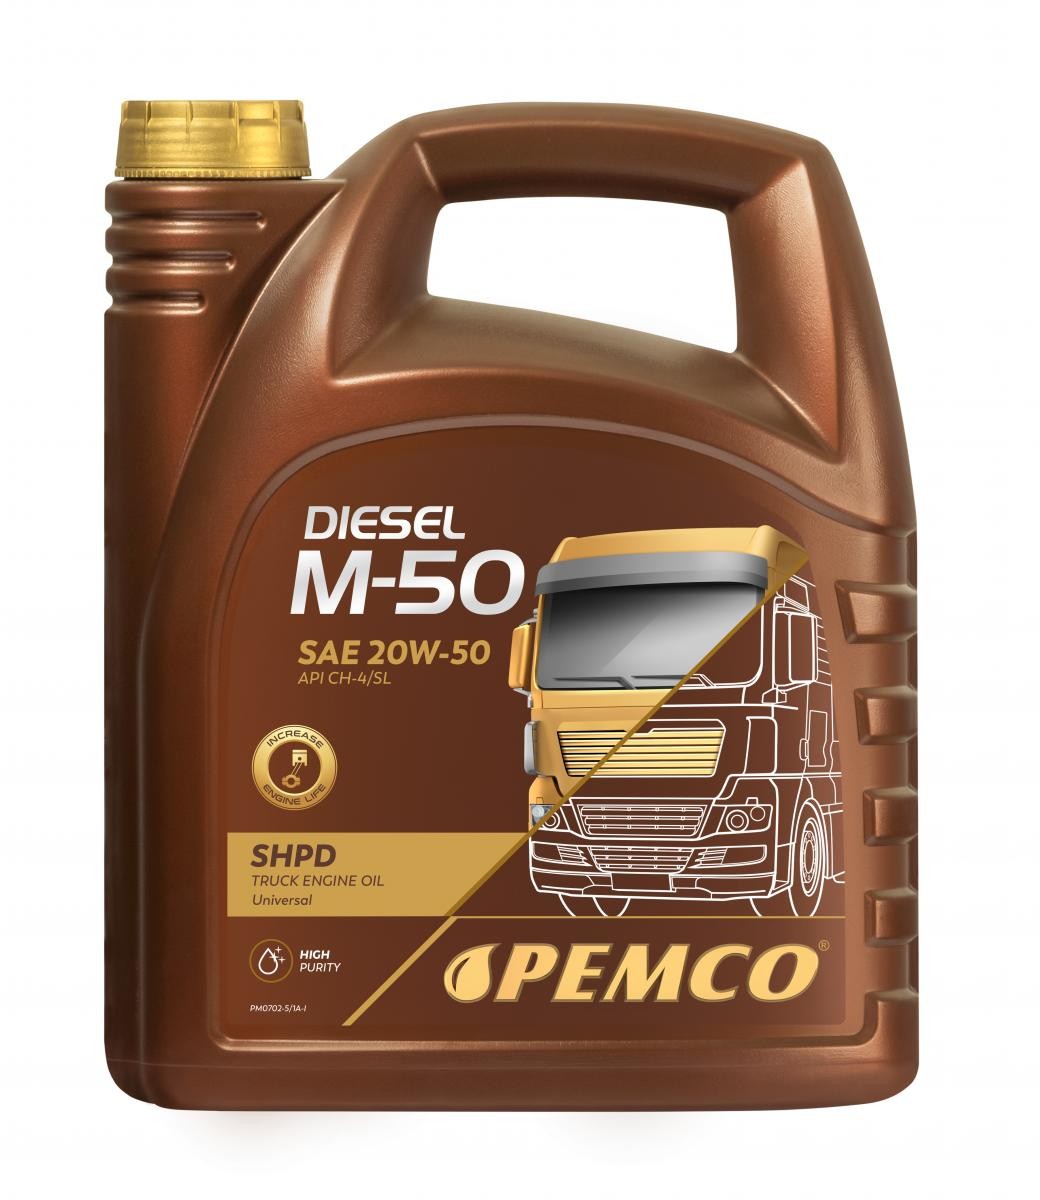 Kaufen Sie KFZ Motoröl PEMCO PM0702-5 Truck SHPD, DIESEL M-50 SHPD 20W-50, 5l, Mineralöl